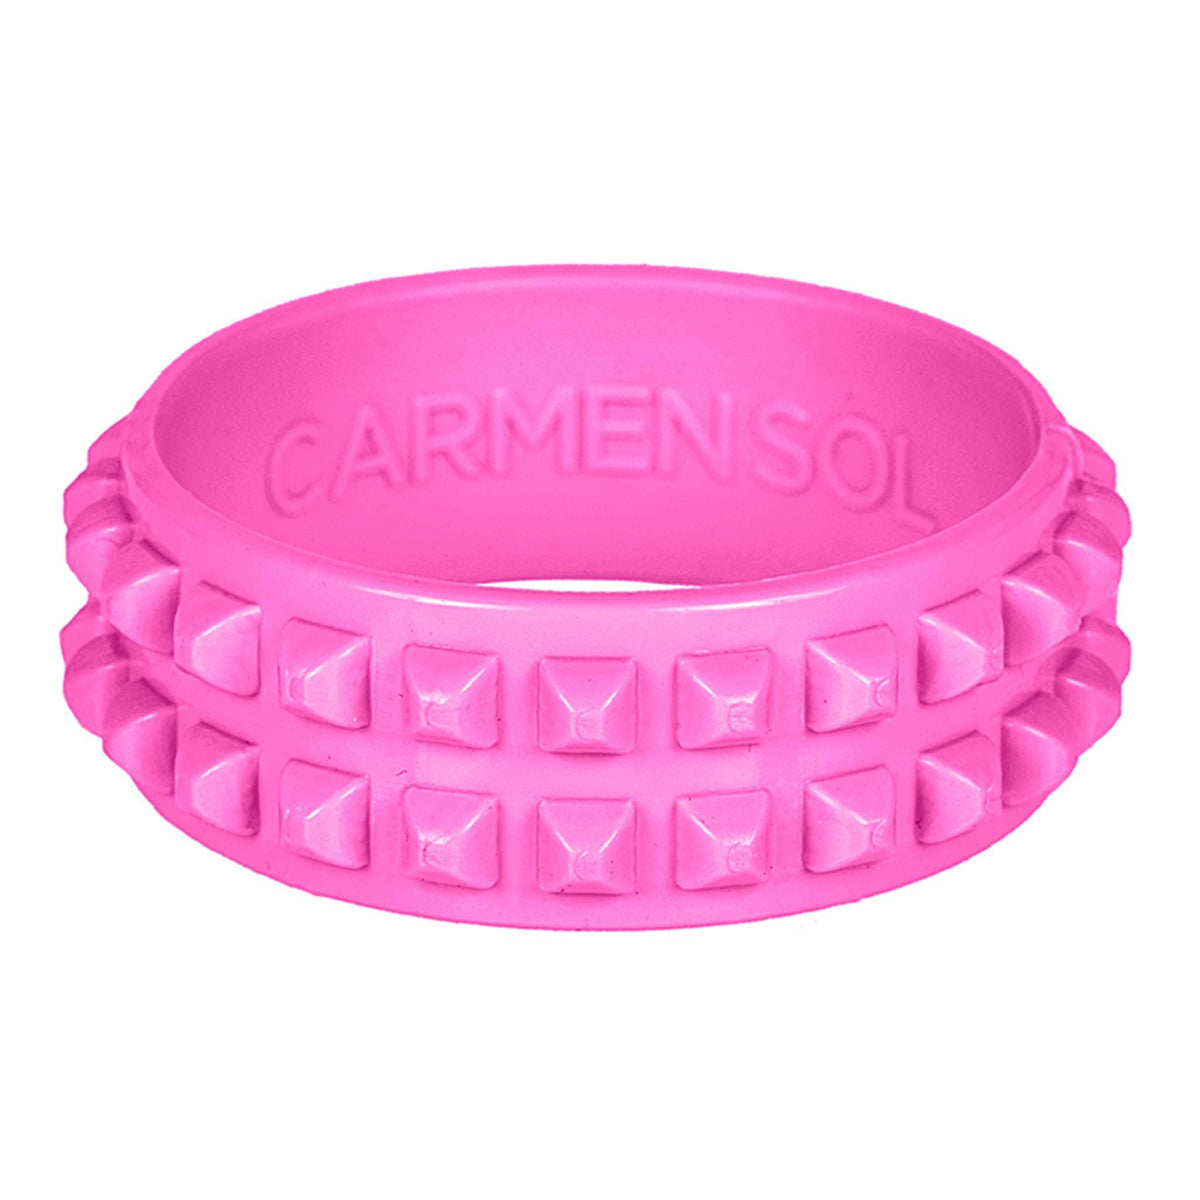 Plastic bracelets in pink 